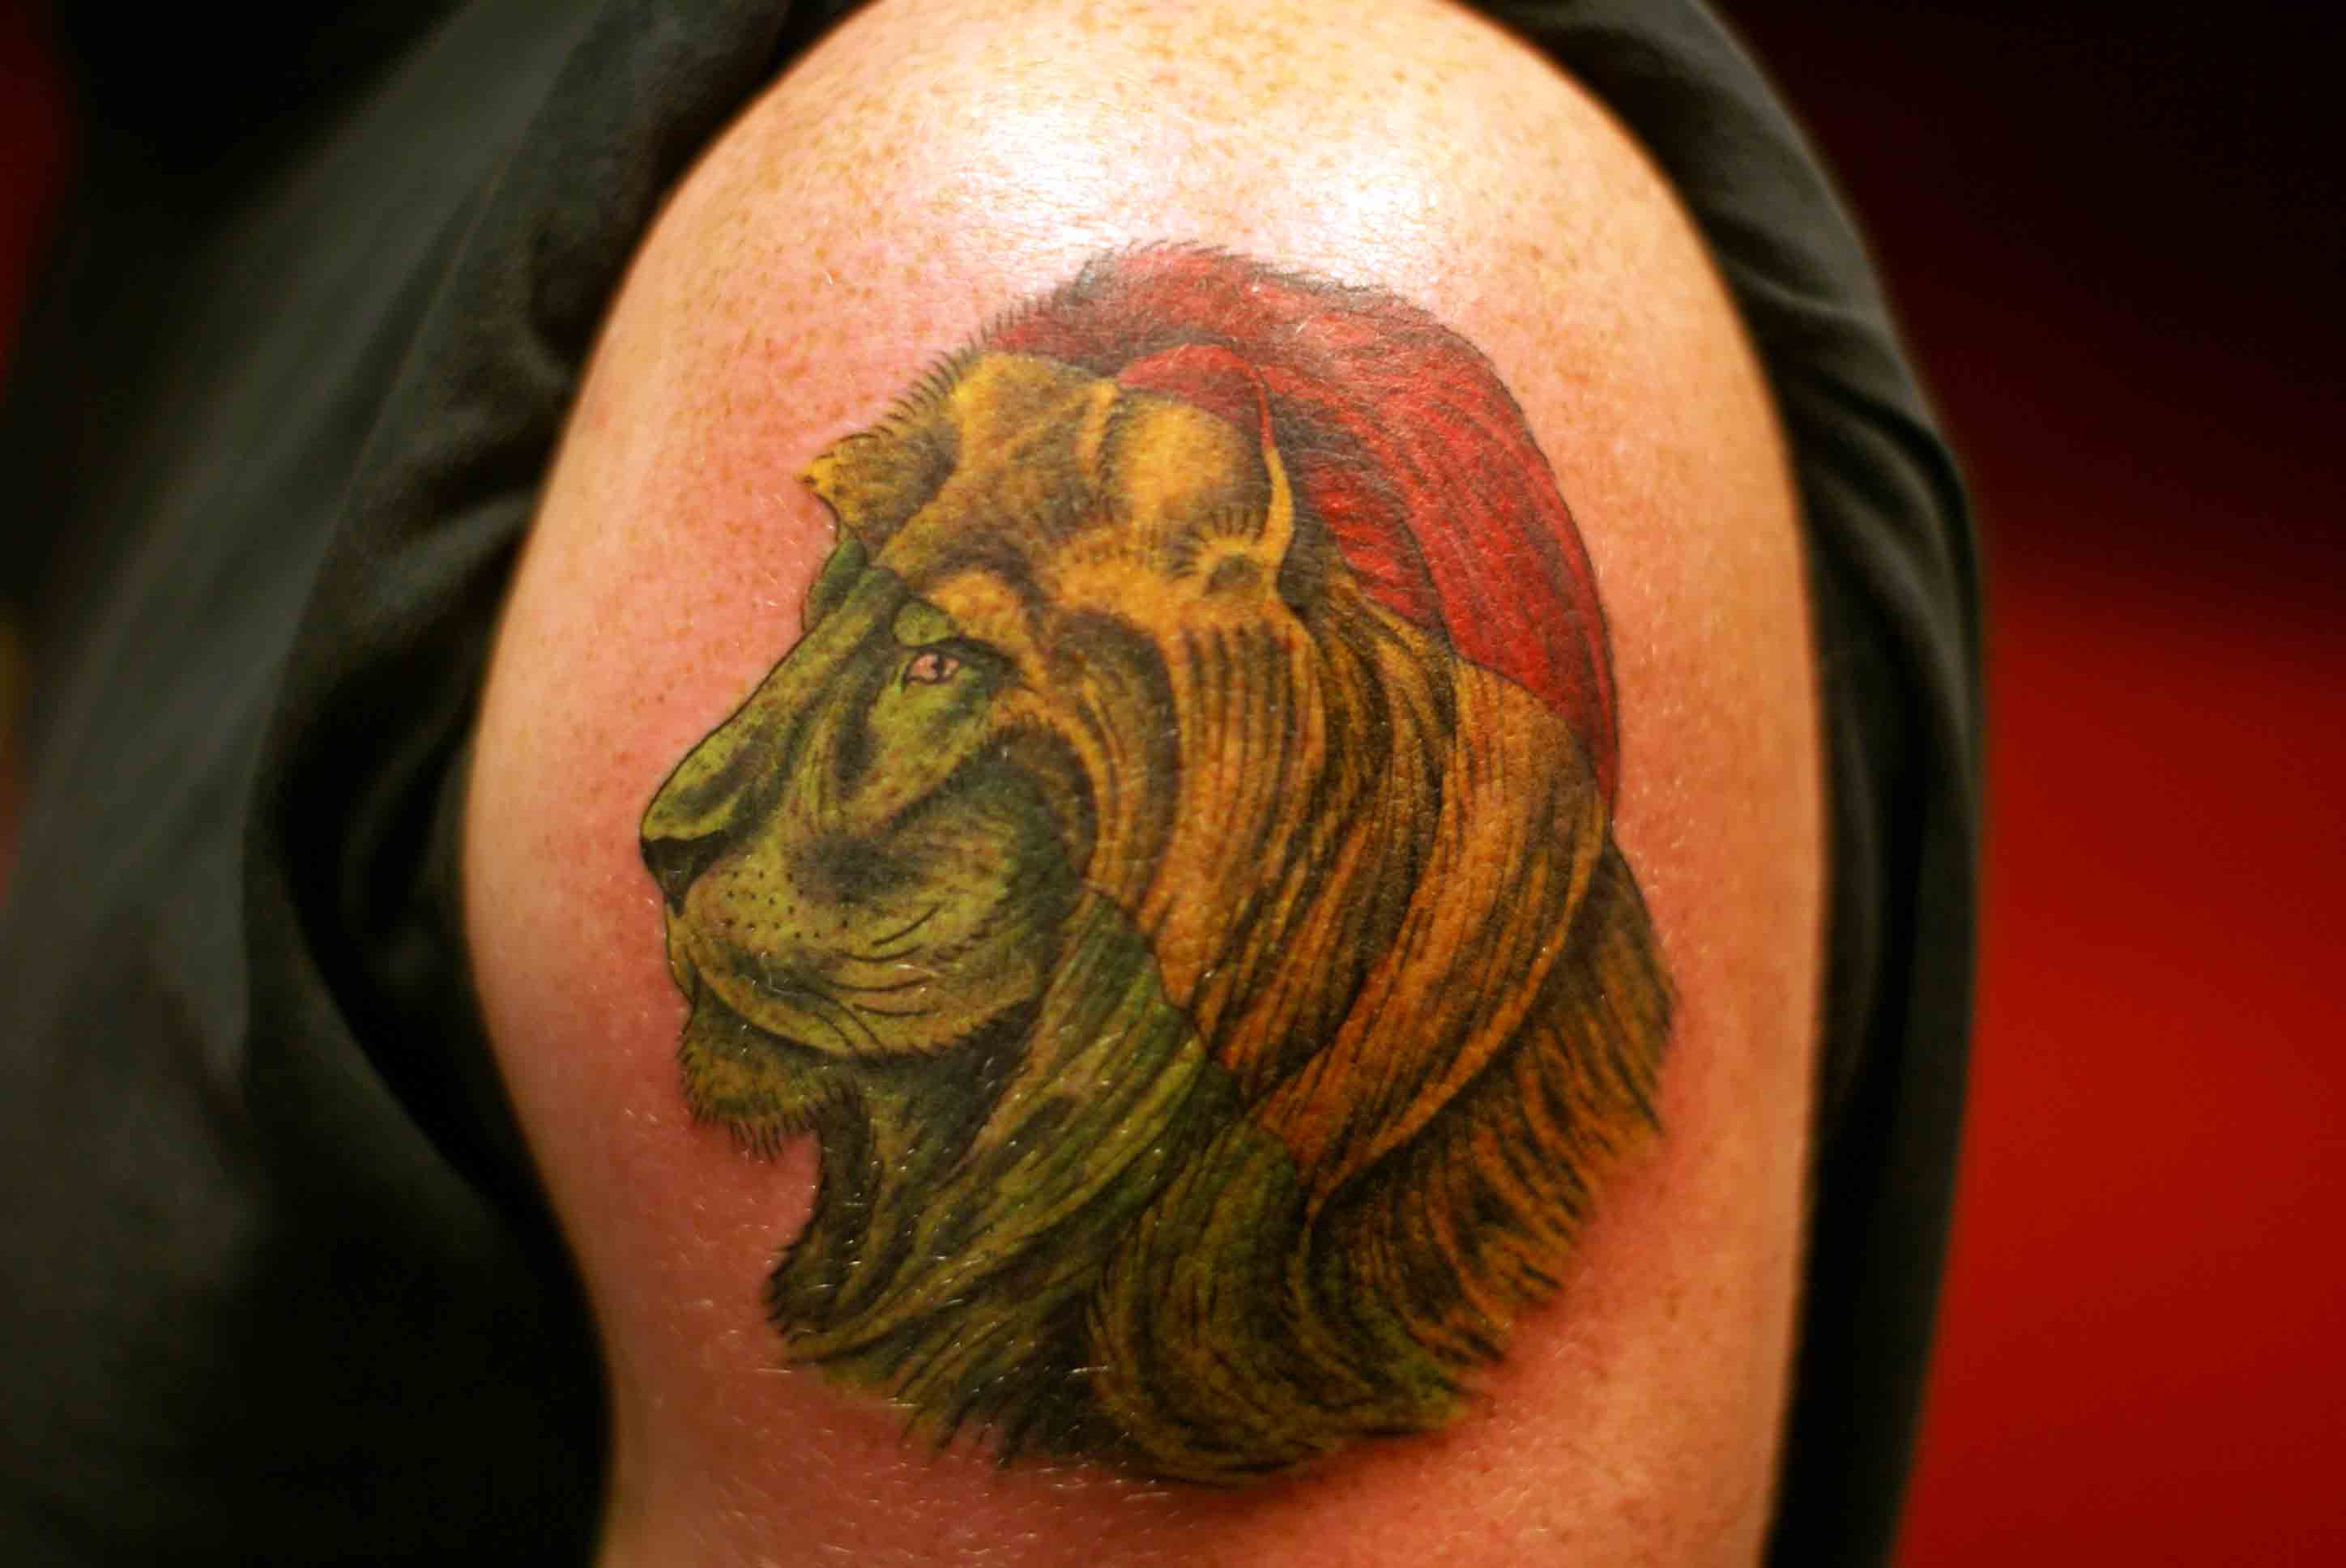 Tattoo uploaded by Servo Jefferson • Rasta lion 311 tattoo by Dub (via IG  -- mr_community) #311tattoo #rasta #lion • Tattoodo